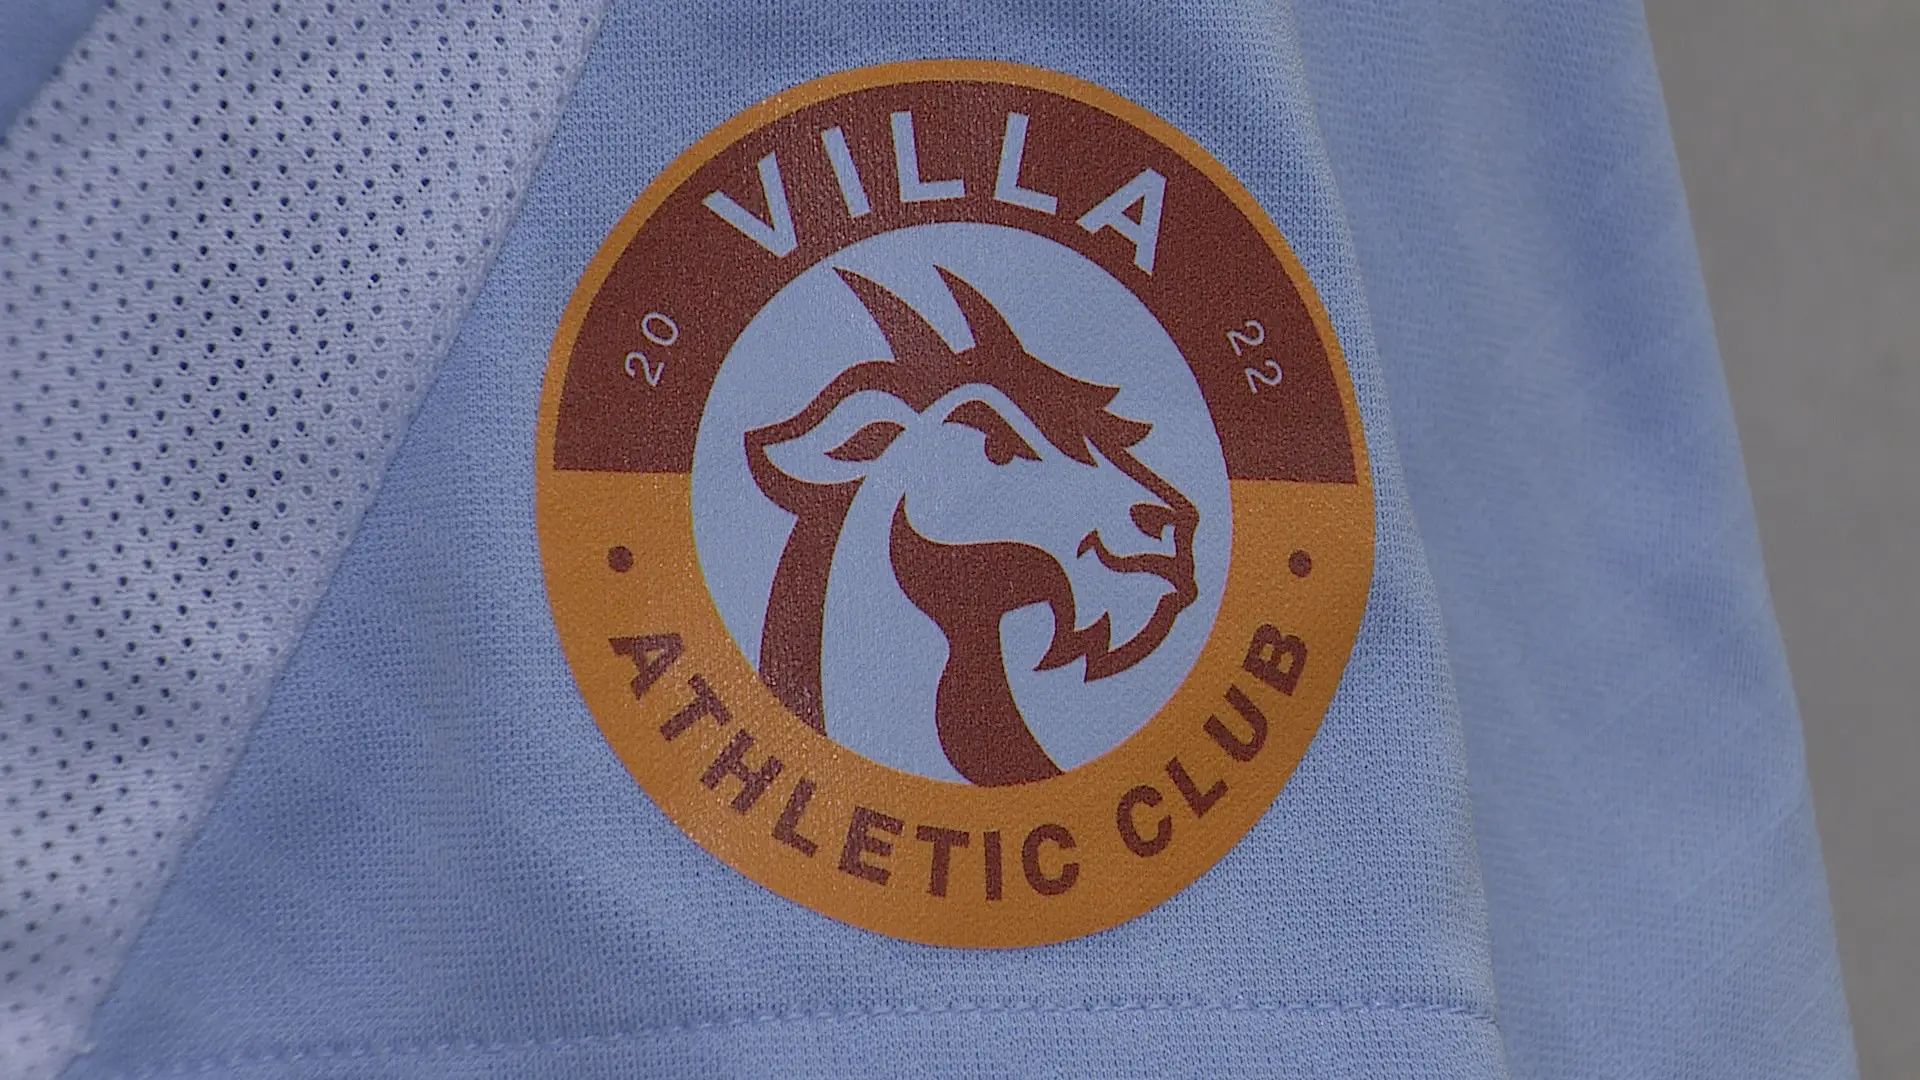 É oficial: Villa Athletic Club abandona Campeonato Distrital de Portalegre